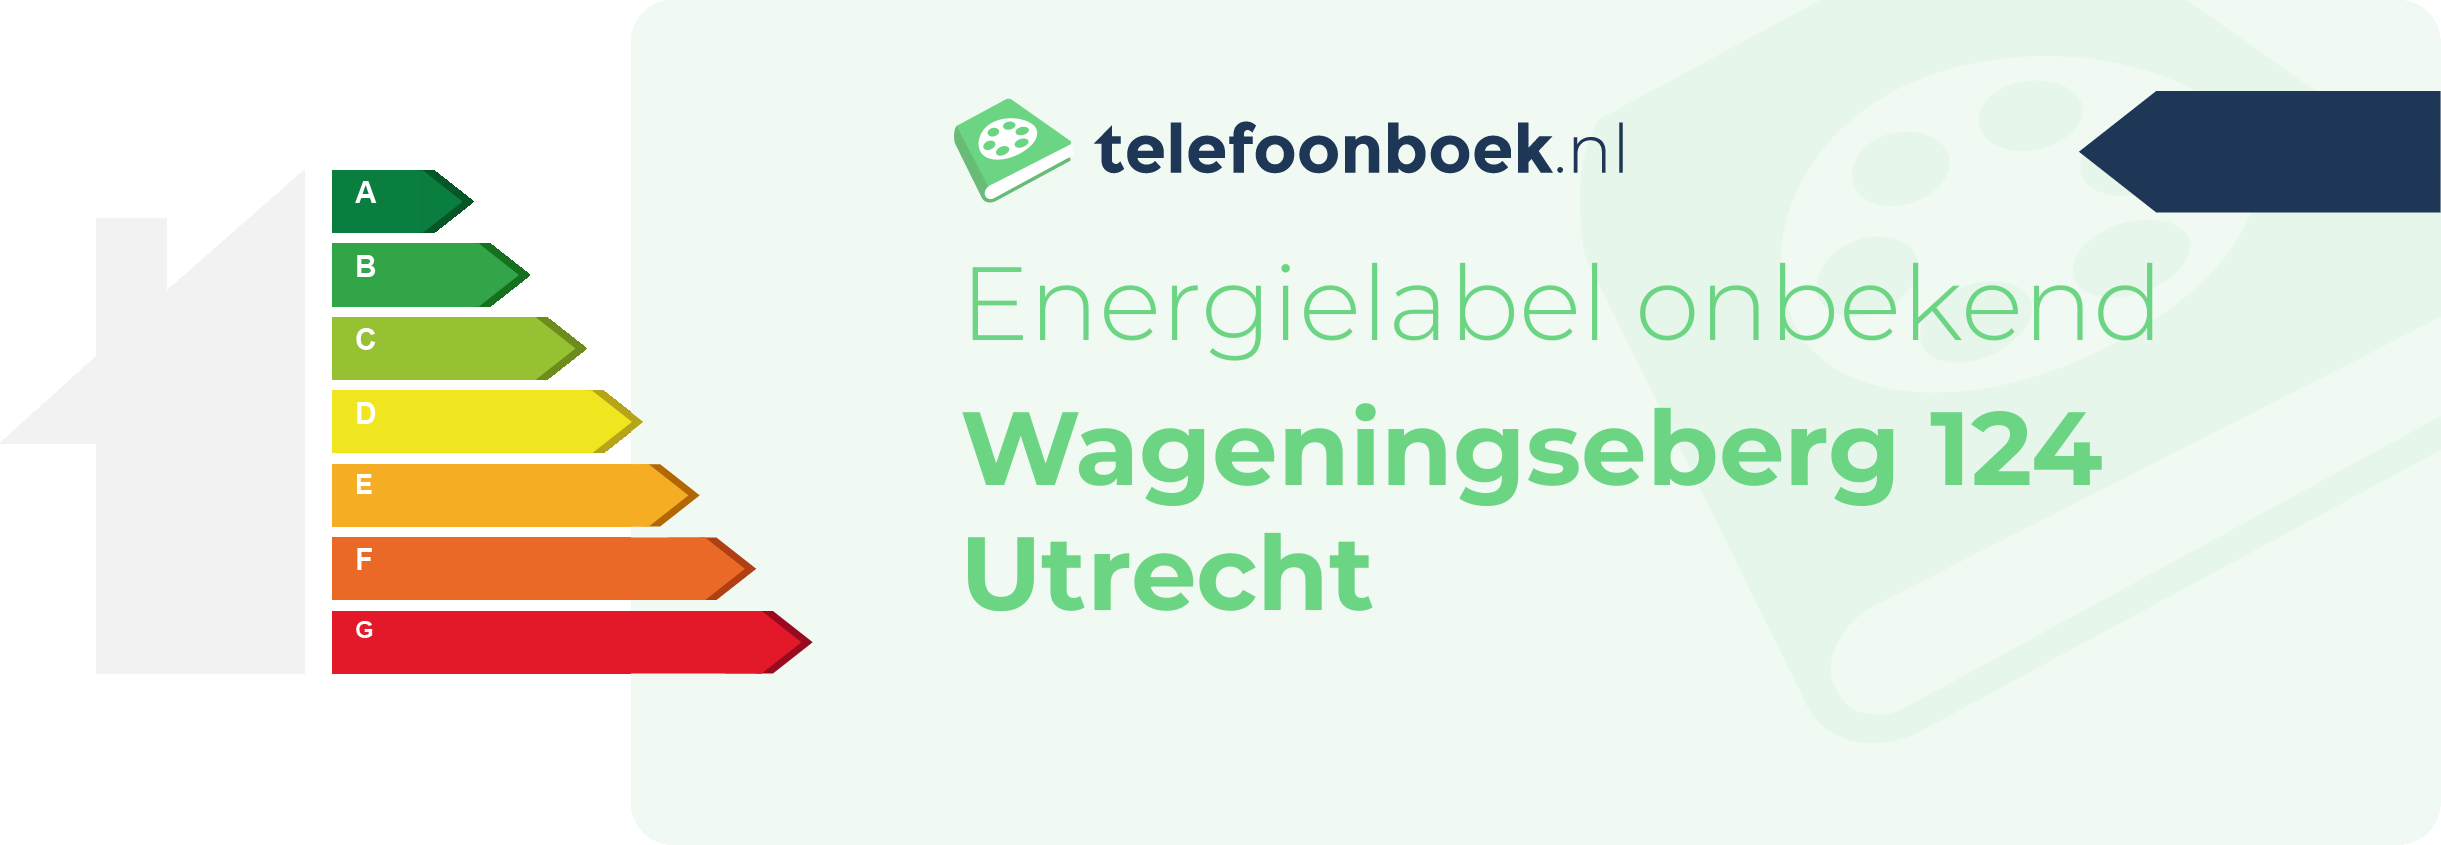 Energielabel Wageningseberg 124 Utrecht